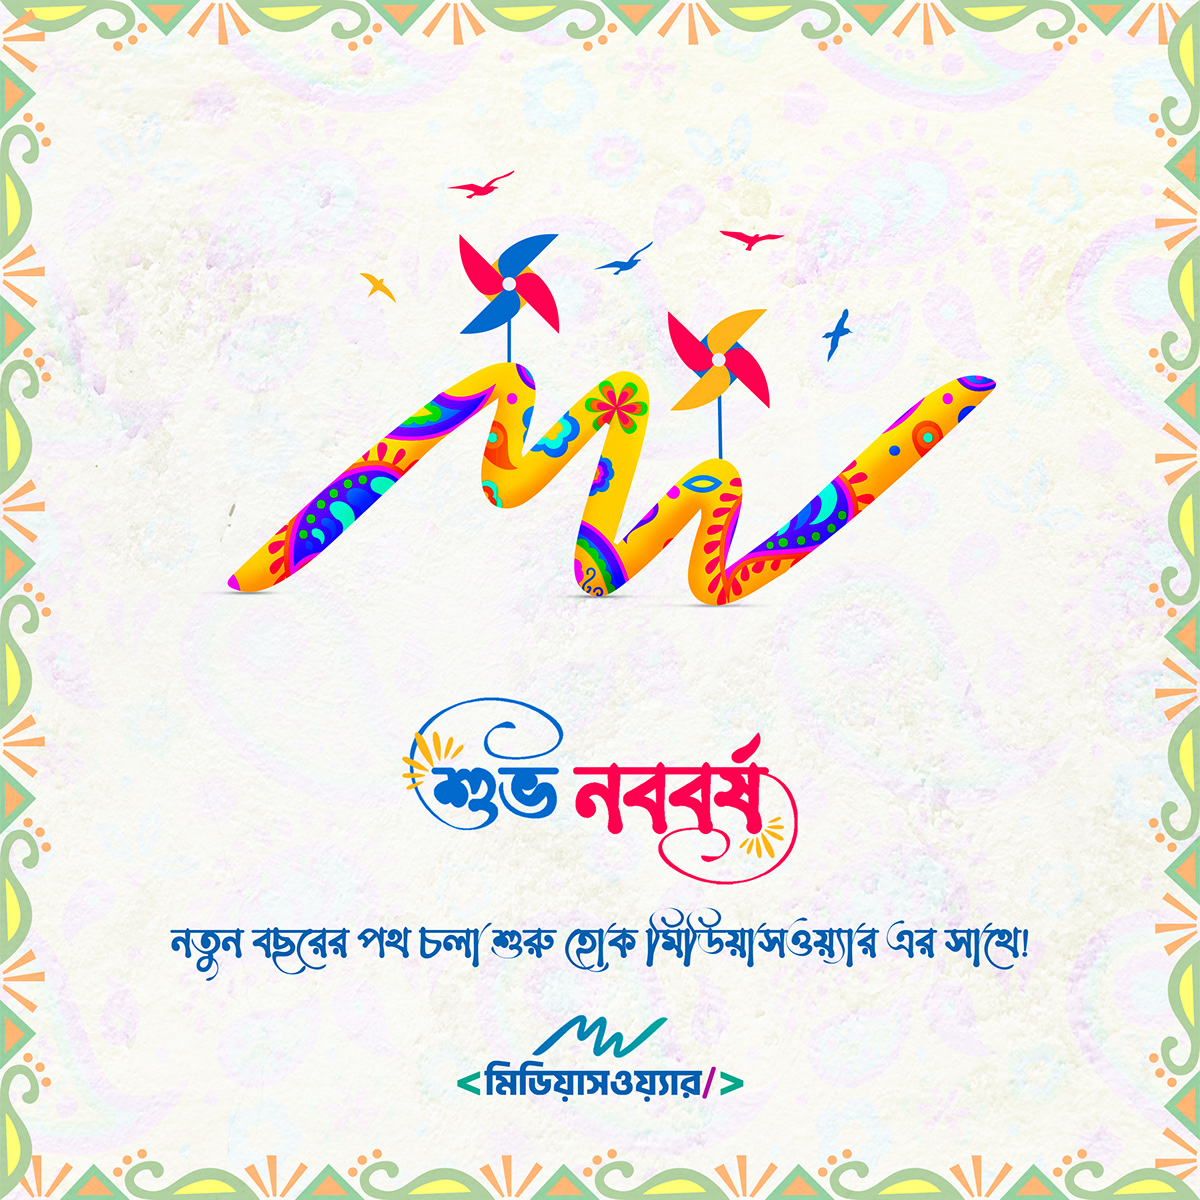 Pohela Boishakh تصفيح داخلي الصرح المميز bangla new year boishakh חנוכה   Bengali New Year 온라인바카라 Bangla festival